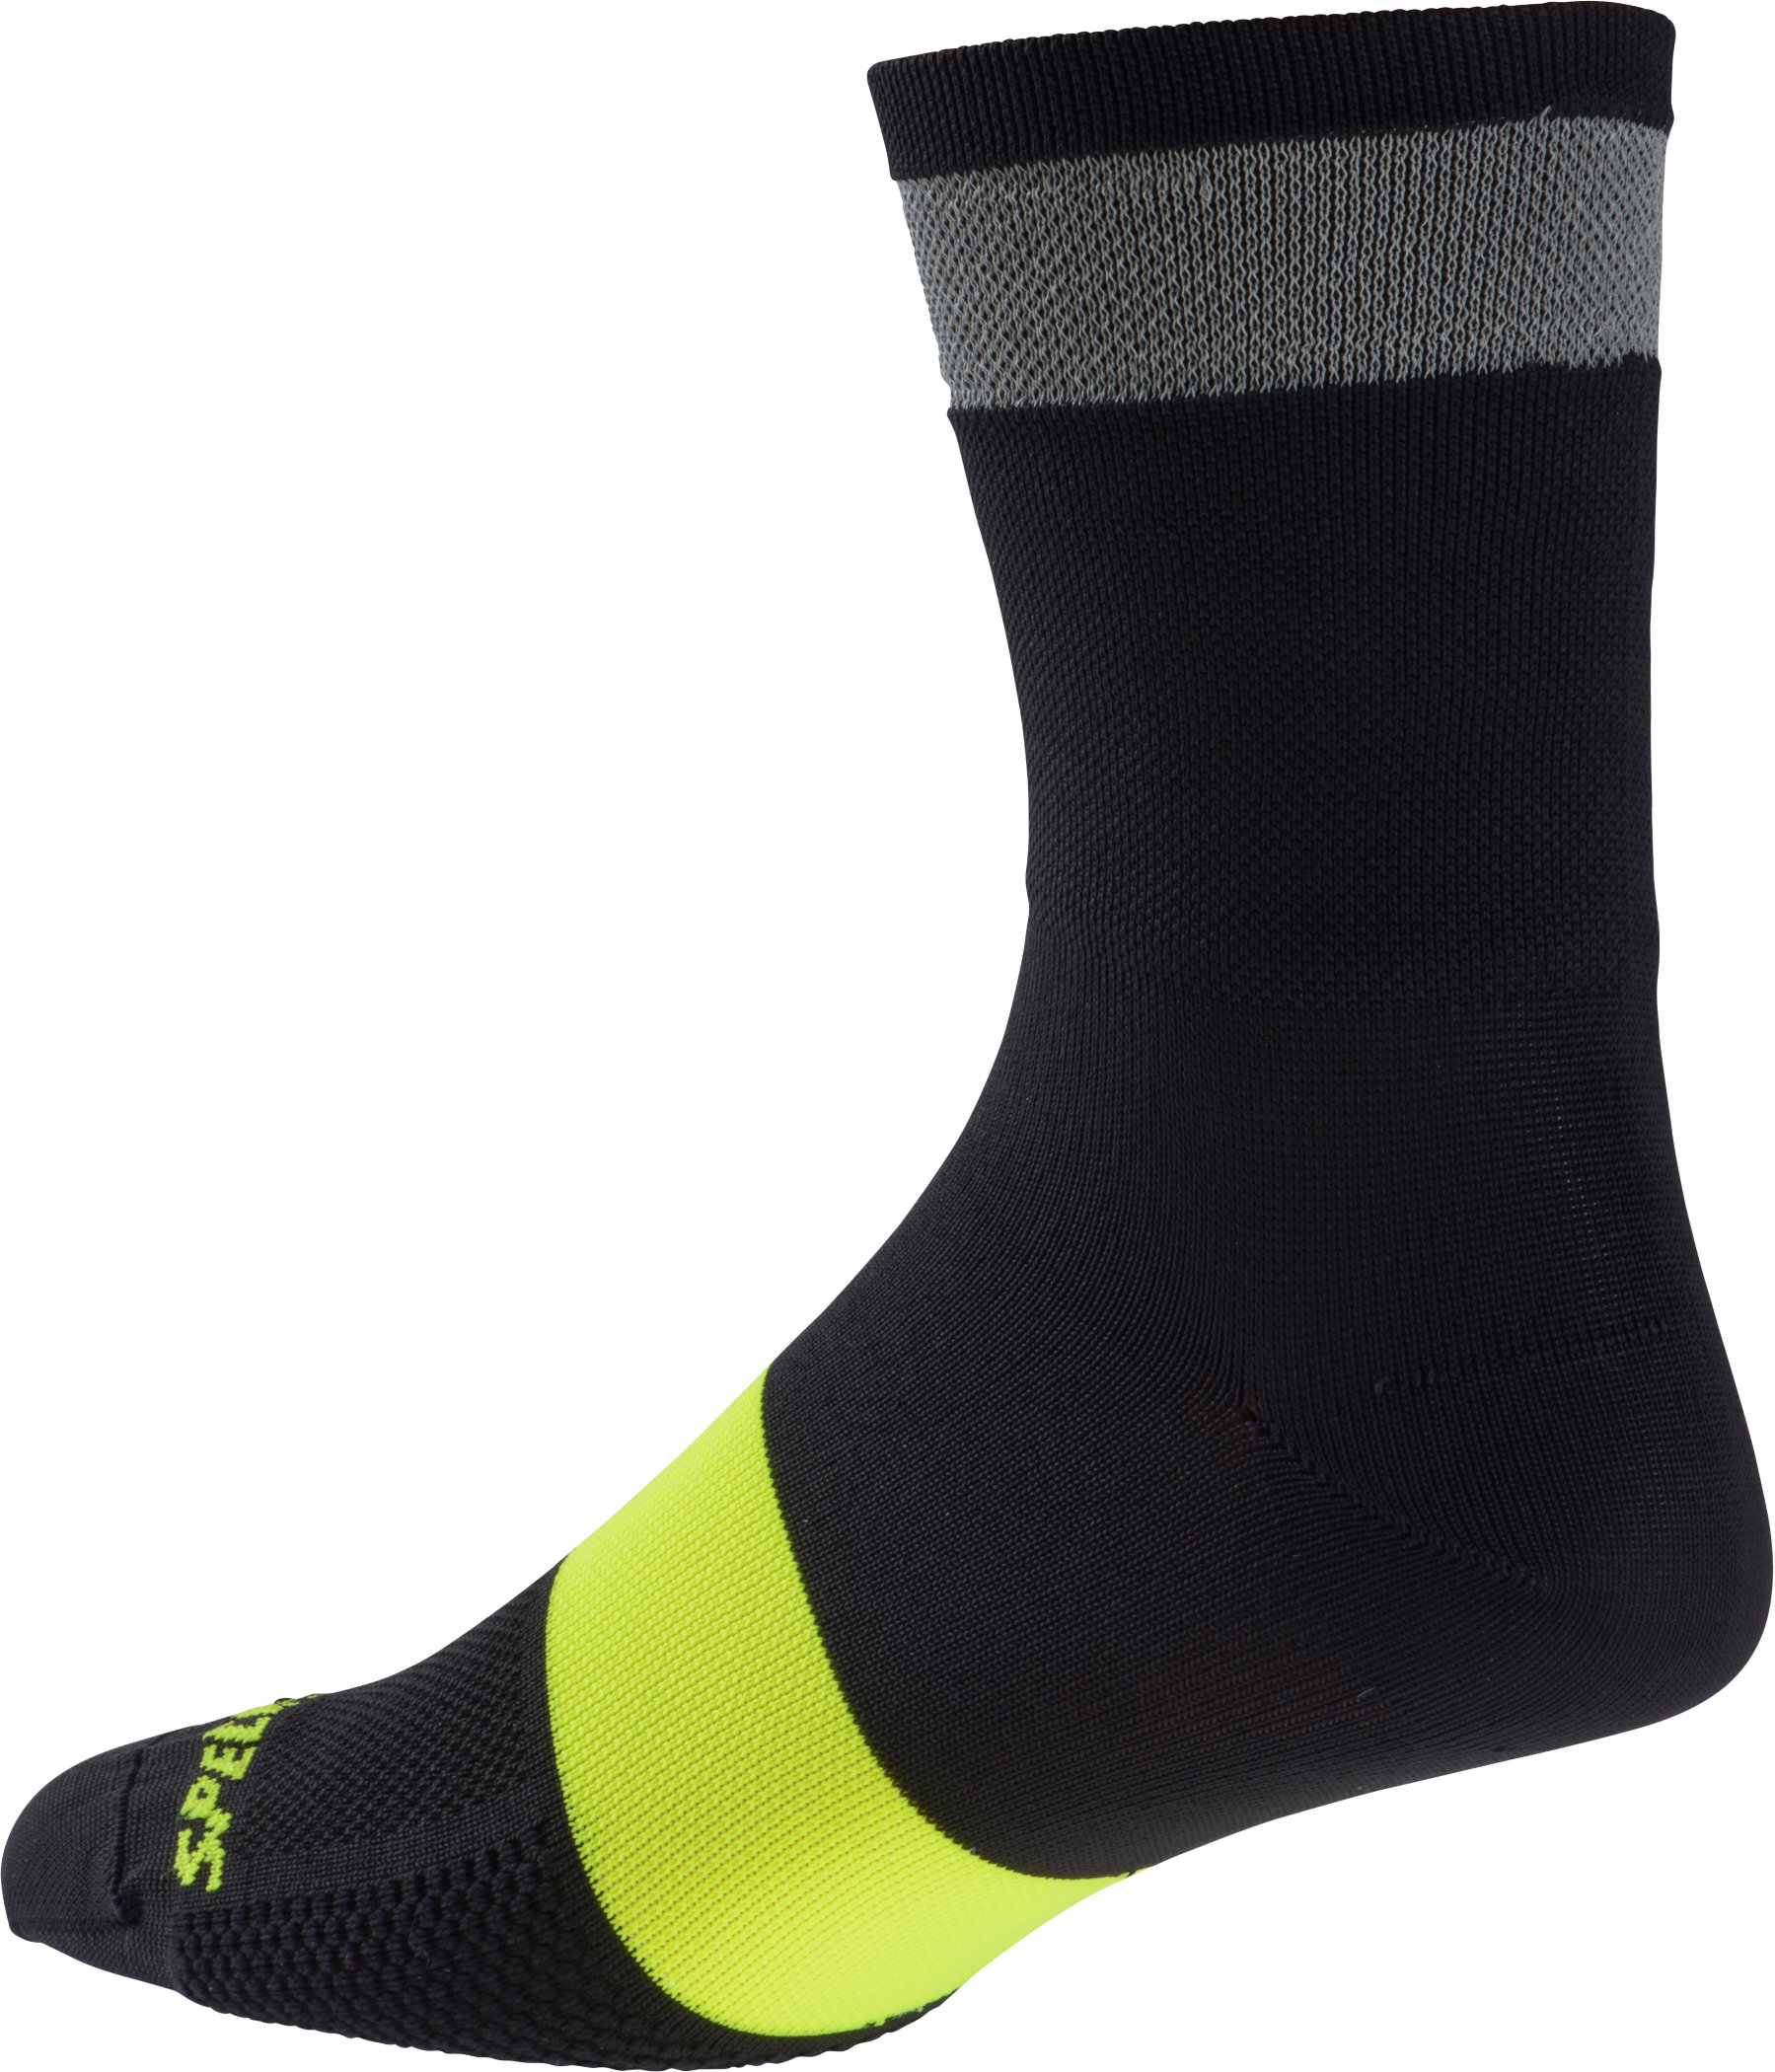 Reflect Tall Socks | Specialized.com